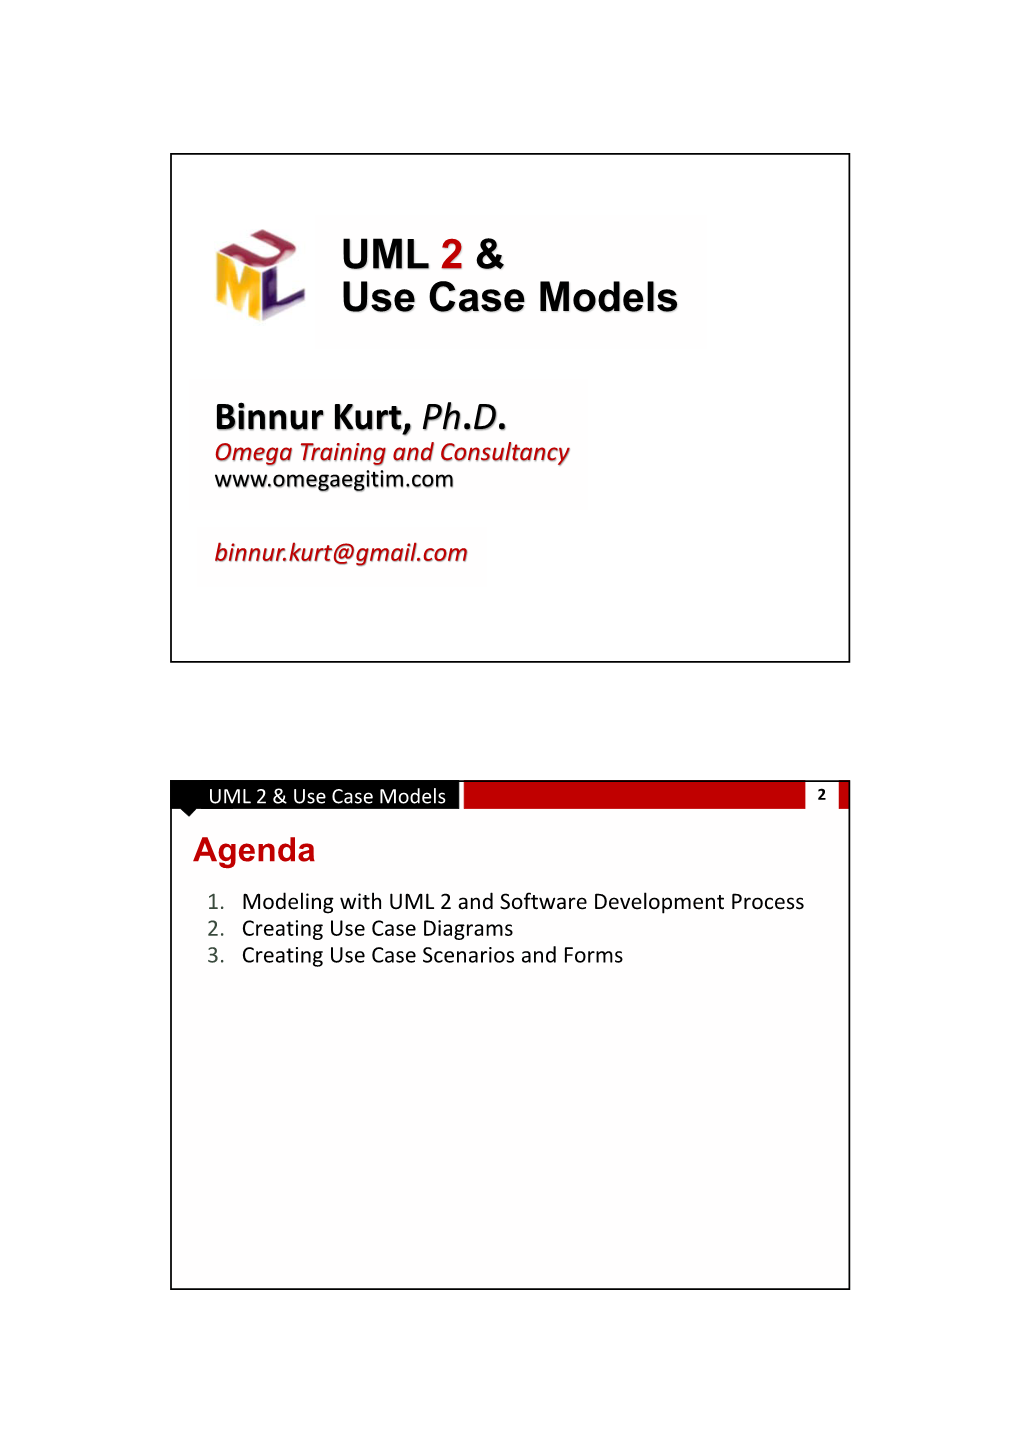 UML 2 & Use Case Models